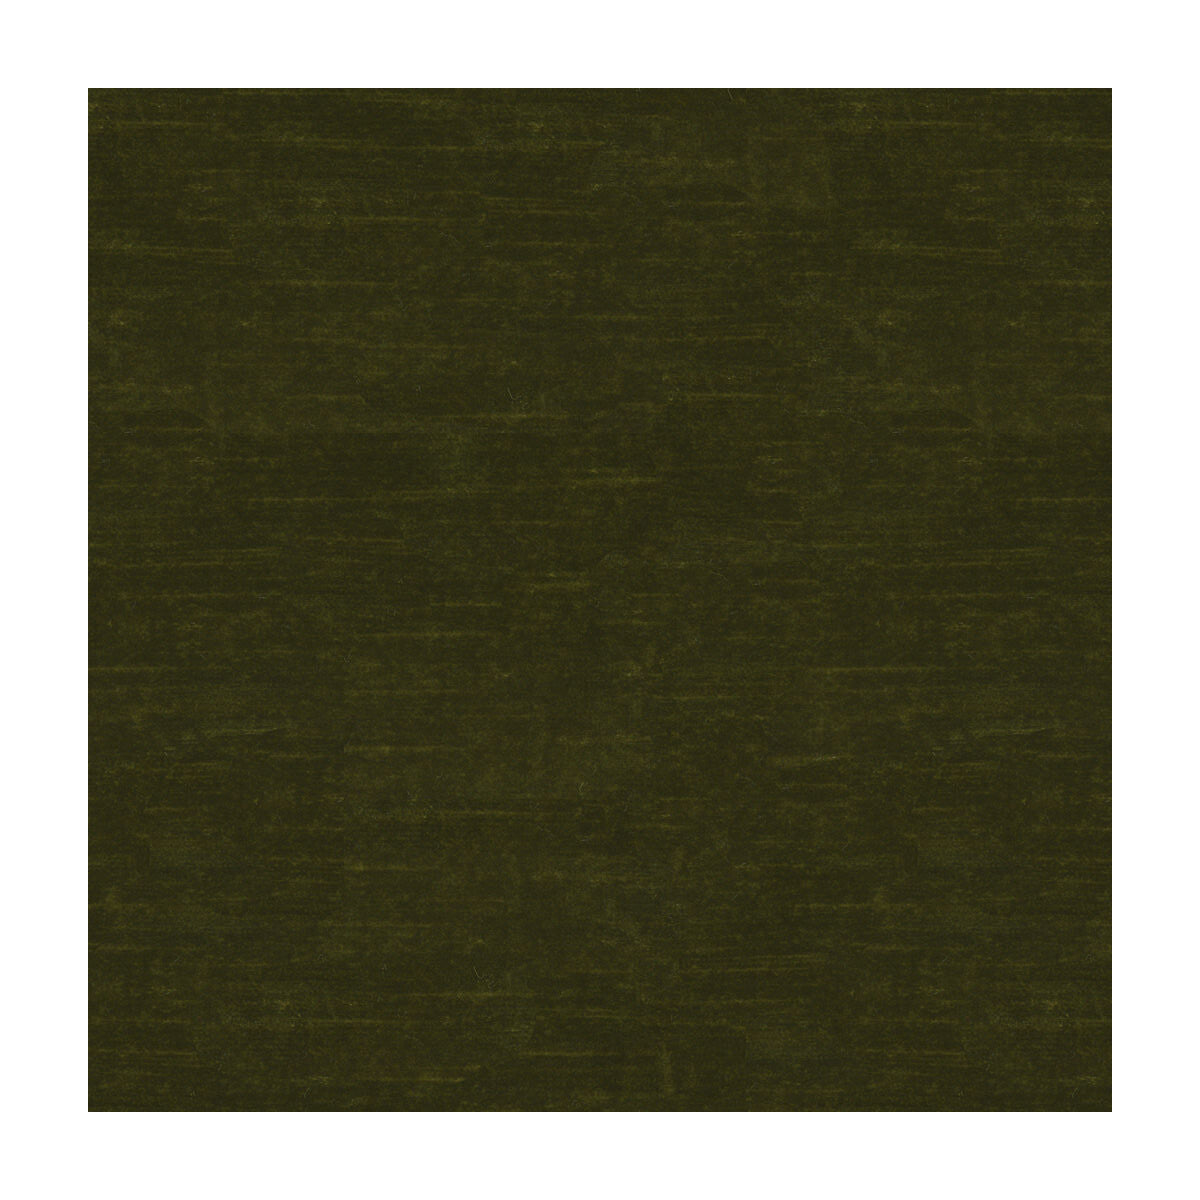 Lazare Velvet fabric in oregano color - pattern 8016103.303.0 - by Brunschwig &amp; Fils